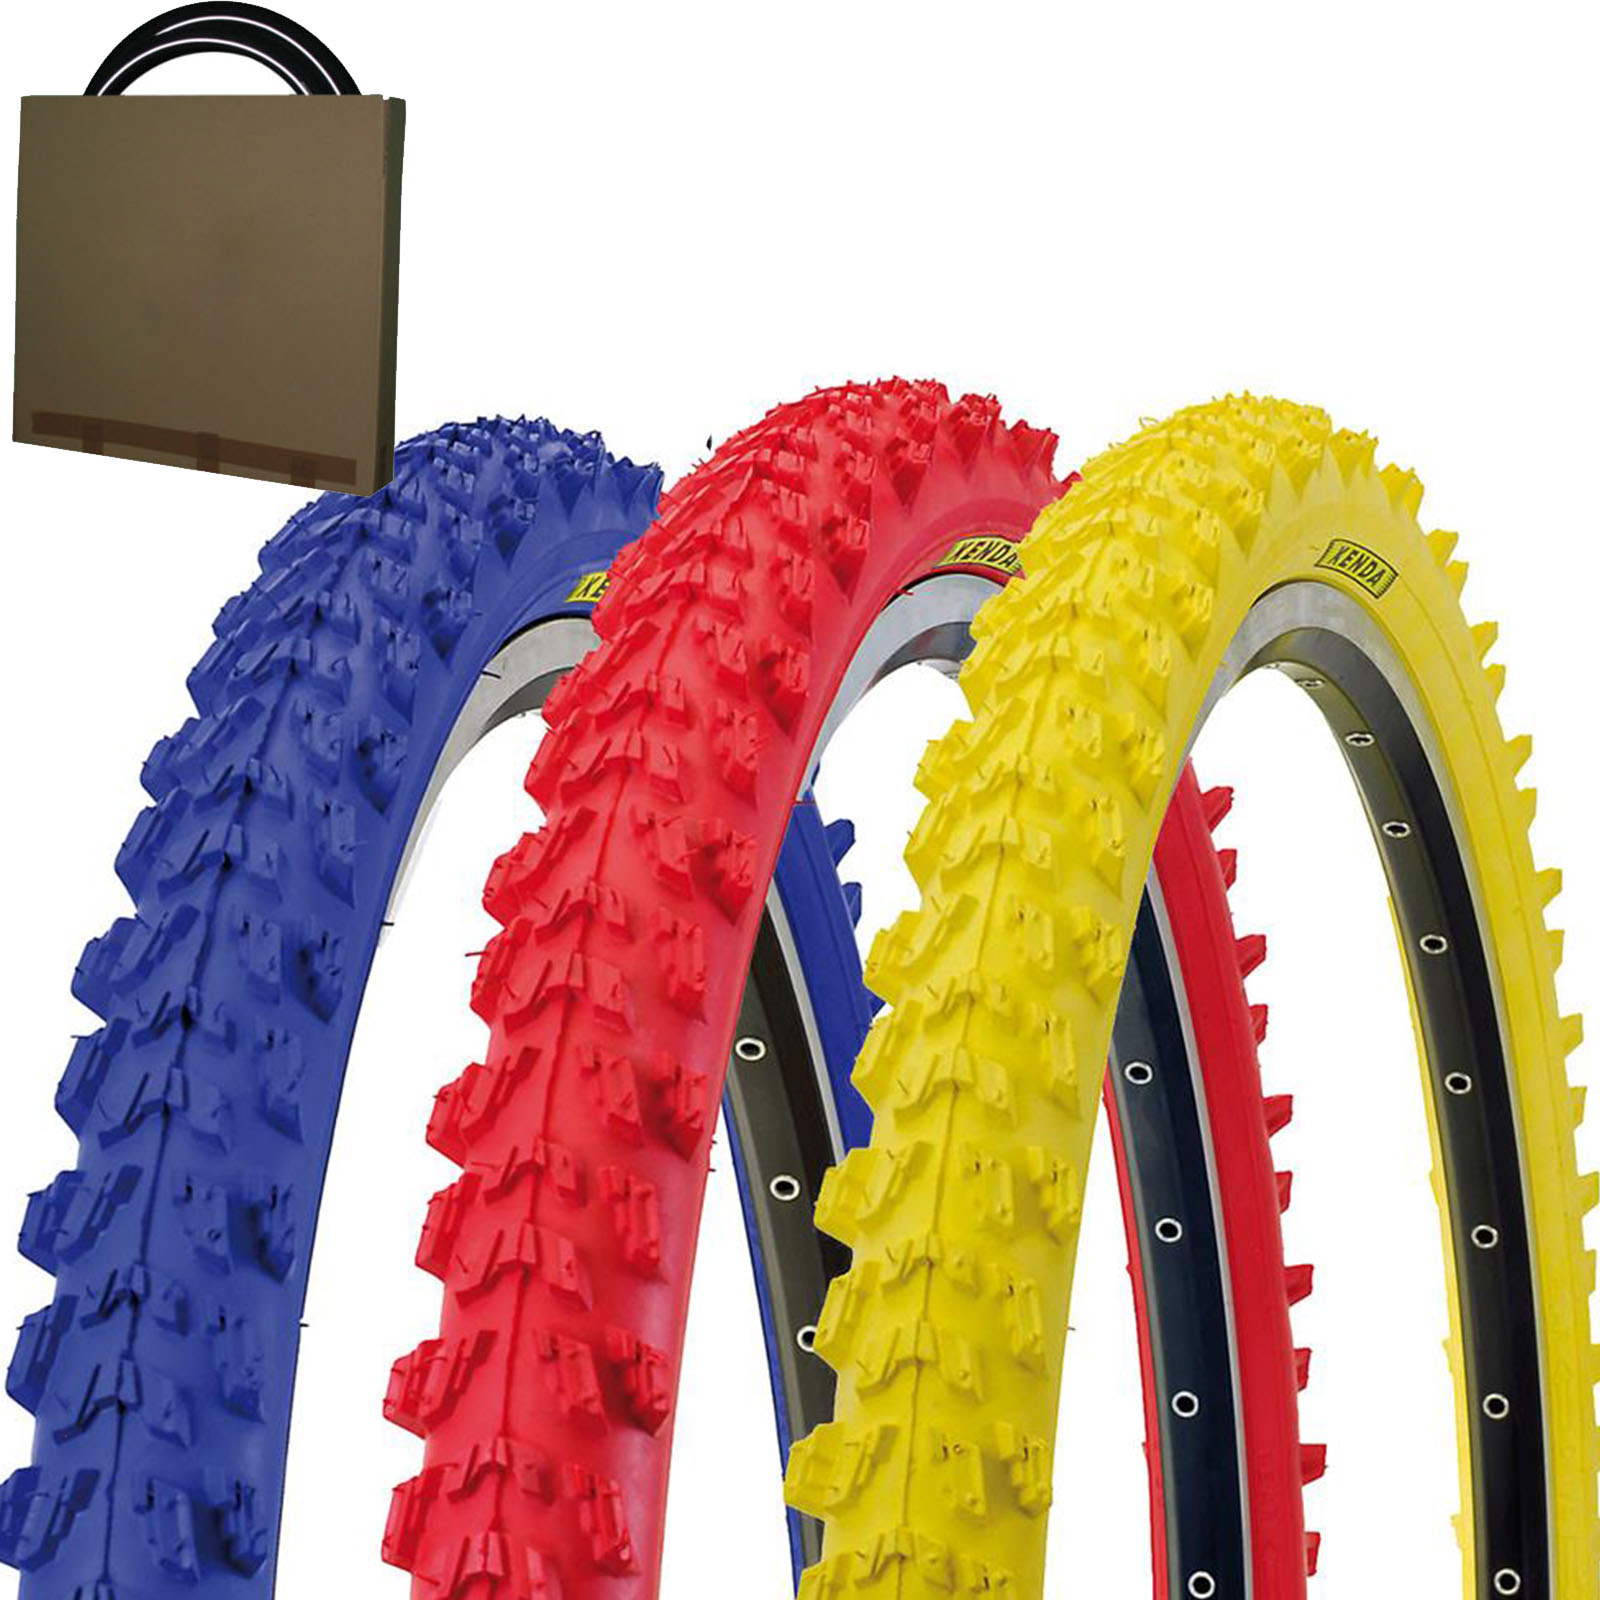 Kenda MTB Fahrrad Reifen K-829 26x1.95 | 50-559 verschiedene Farben